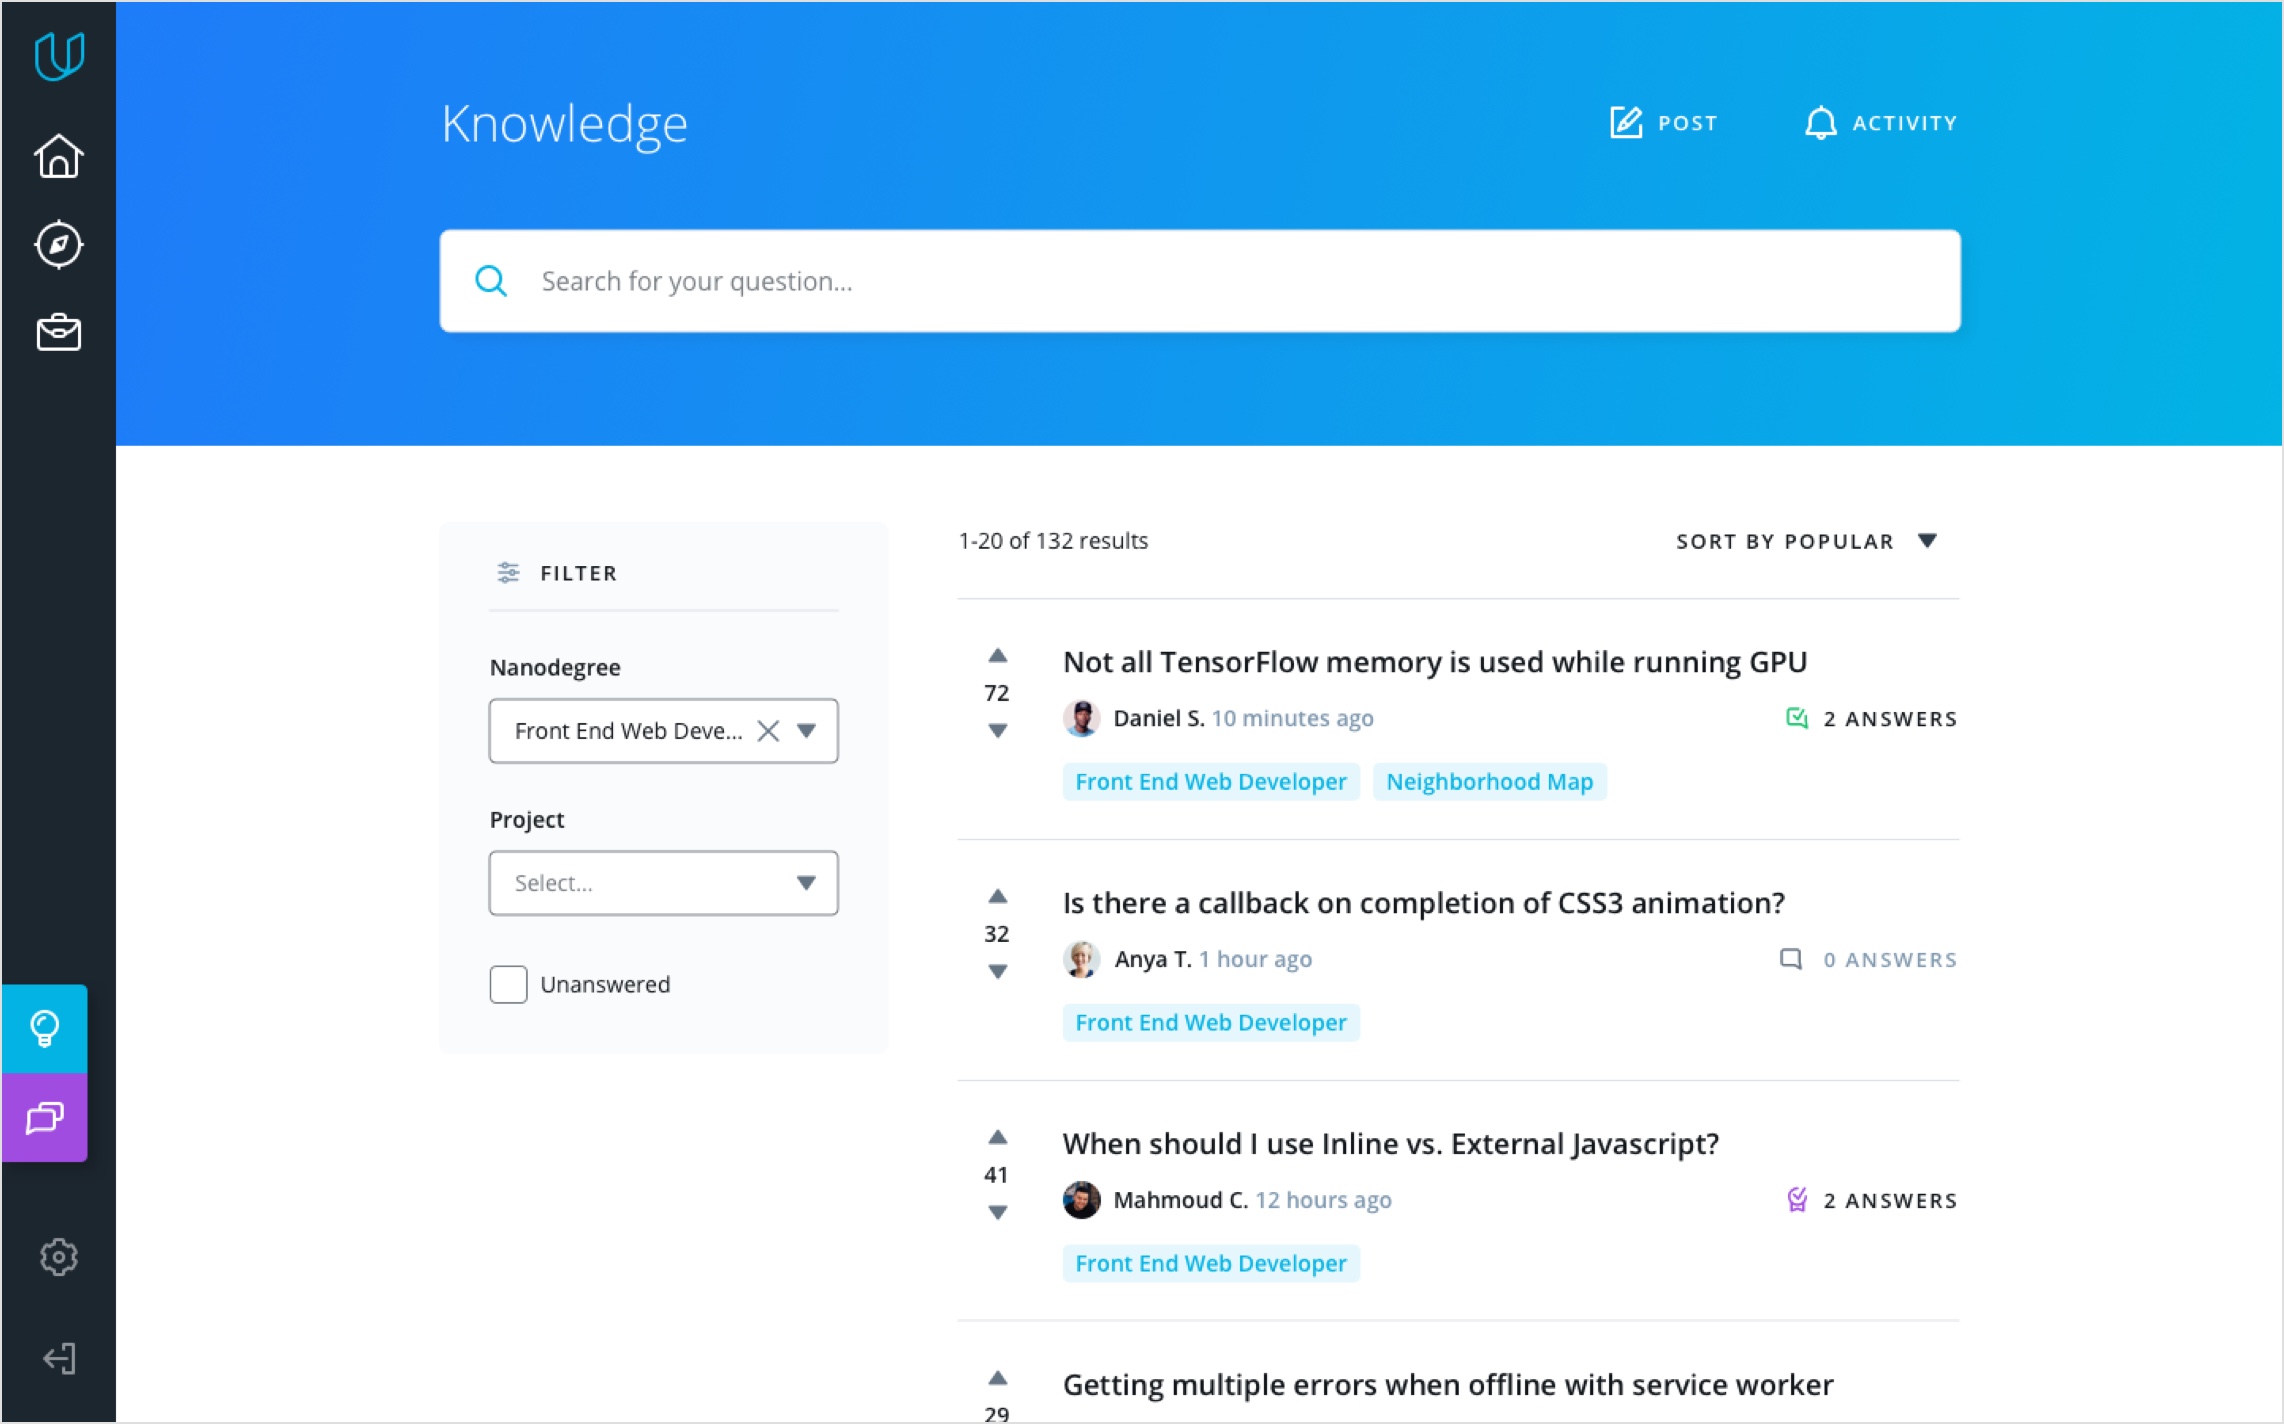 Screenshot of Knowledge home